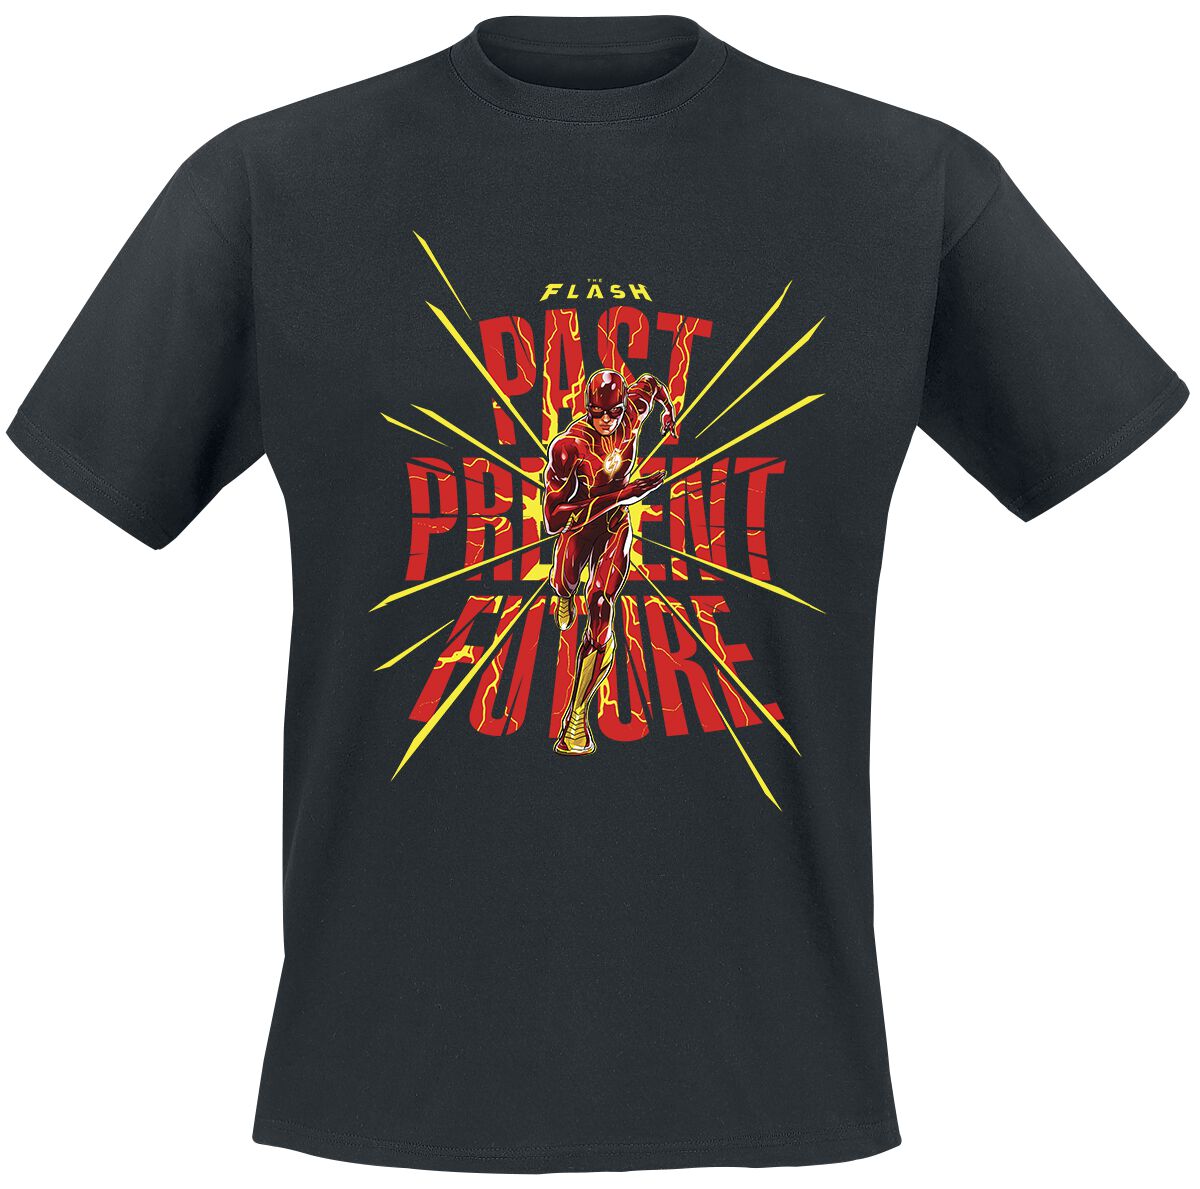 The Flash Past Present Future T-Shirt schwarz in XXL